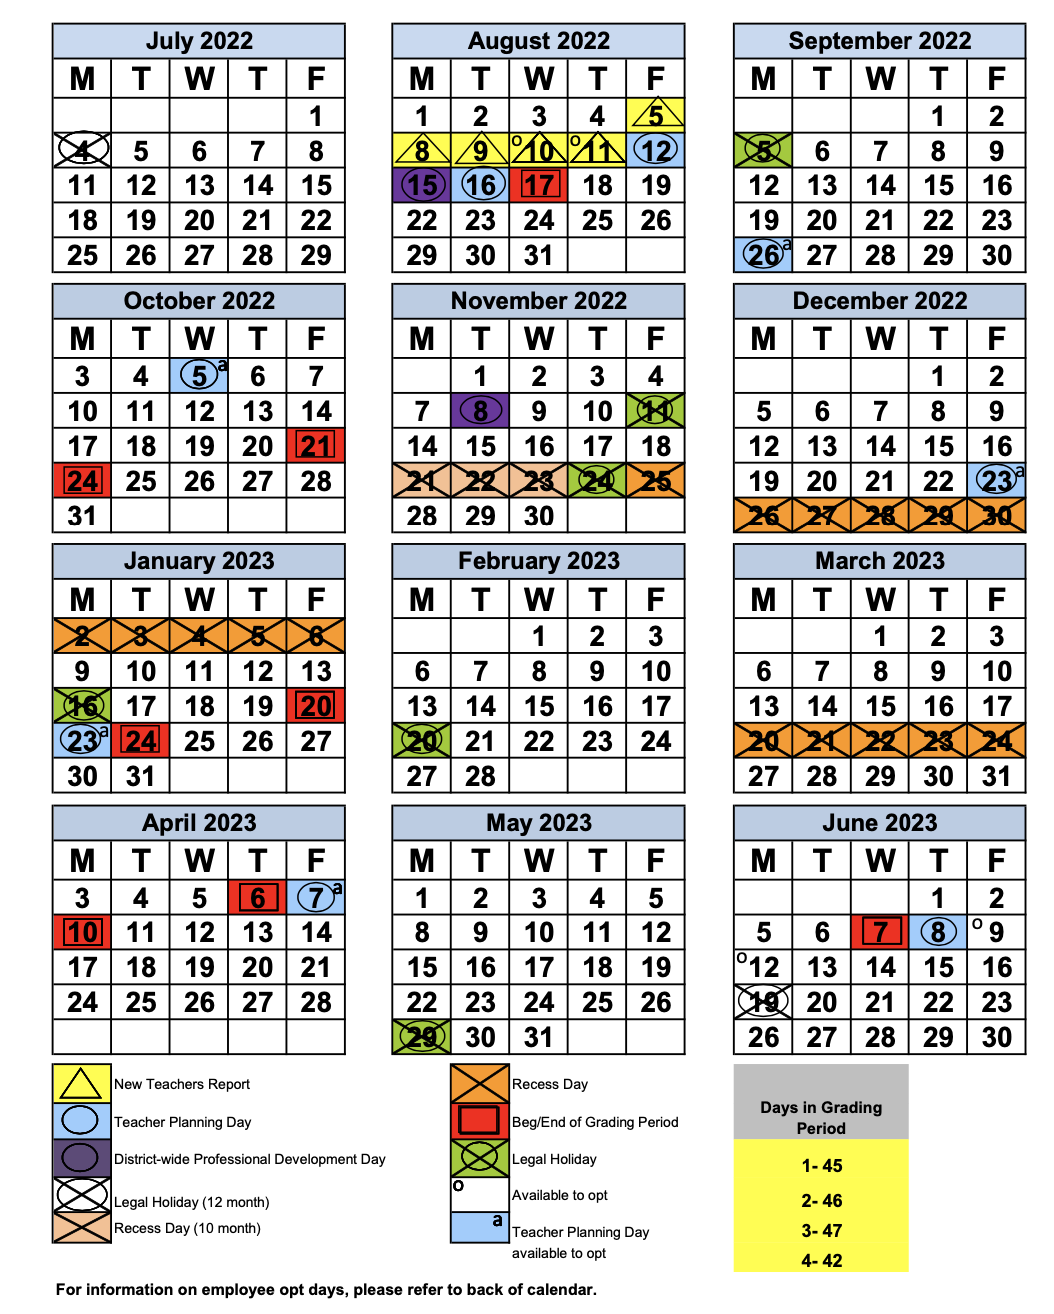 2023 And 2023 Miami Dade School Calendar Get Calendar 2023 Update